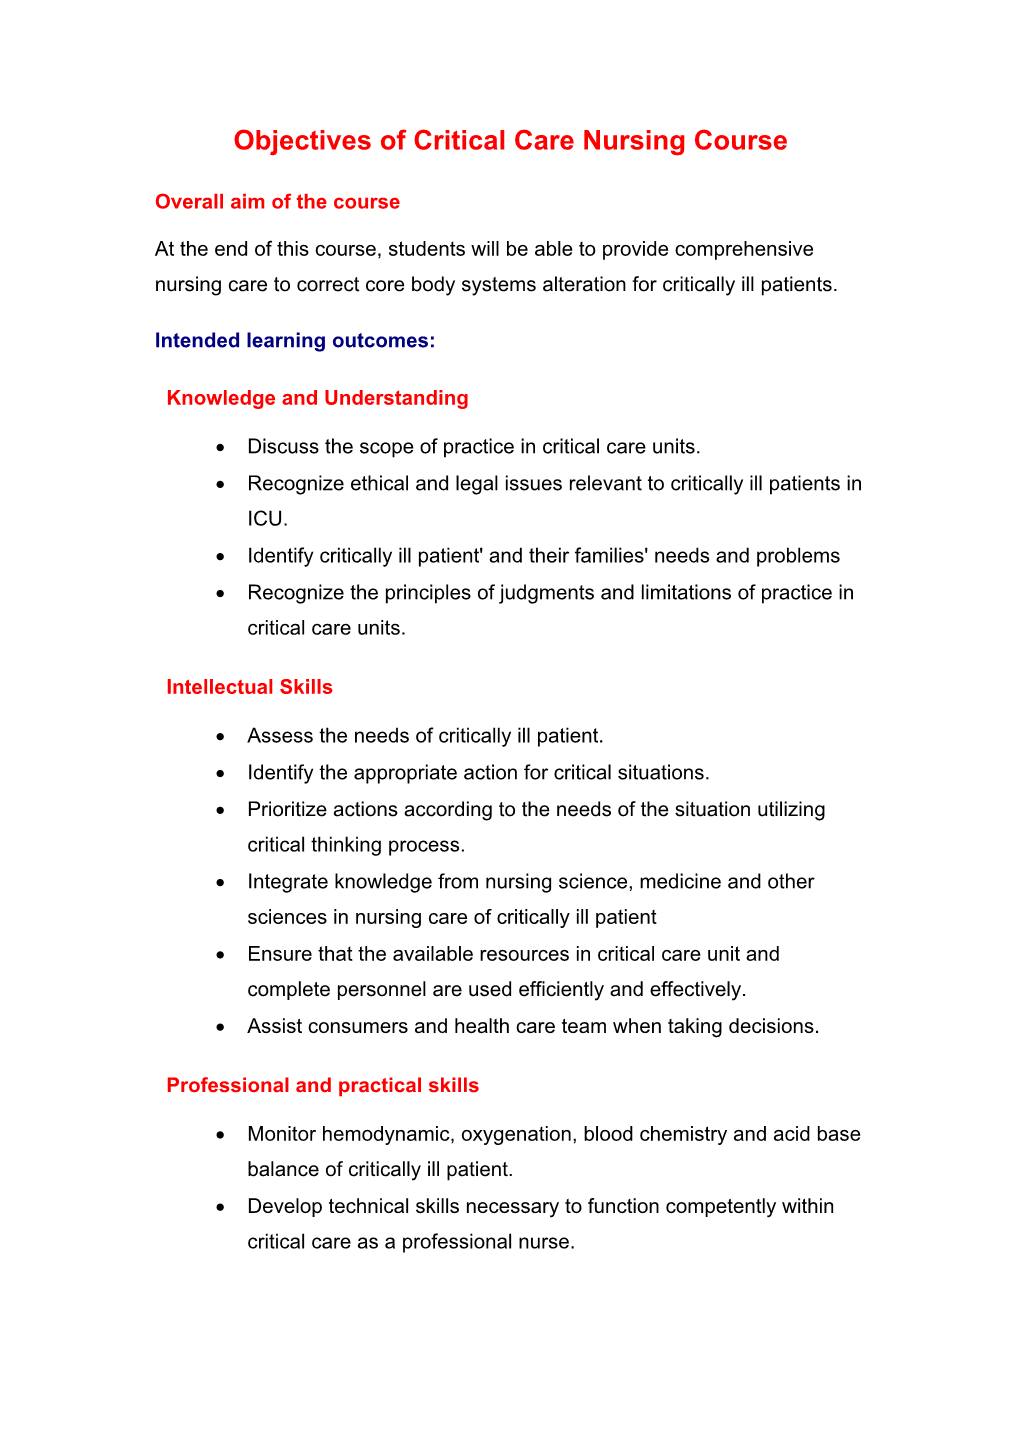 Objectives of Critical Care Nursing Course